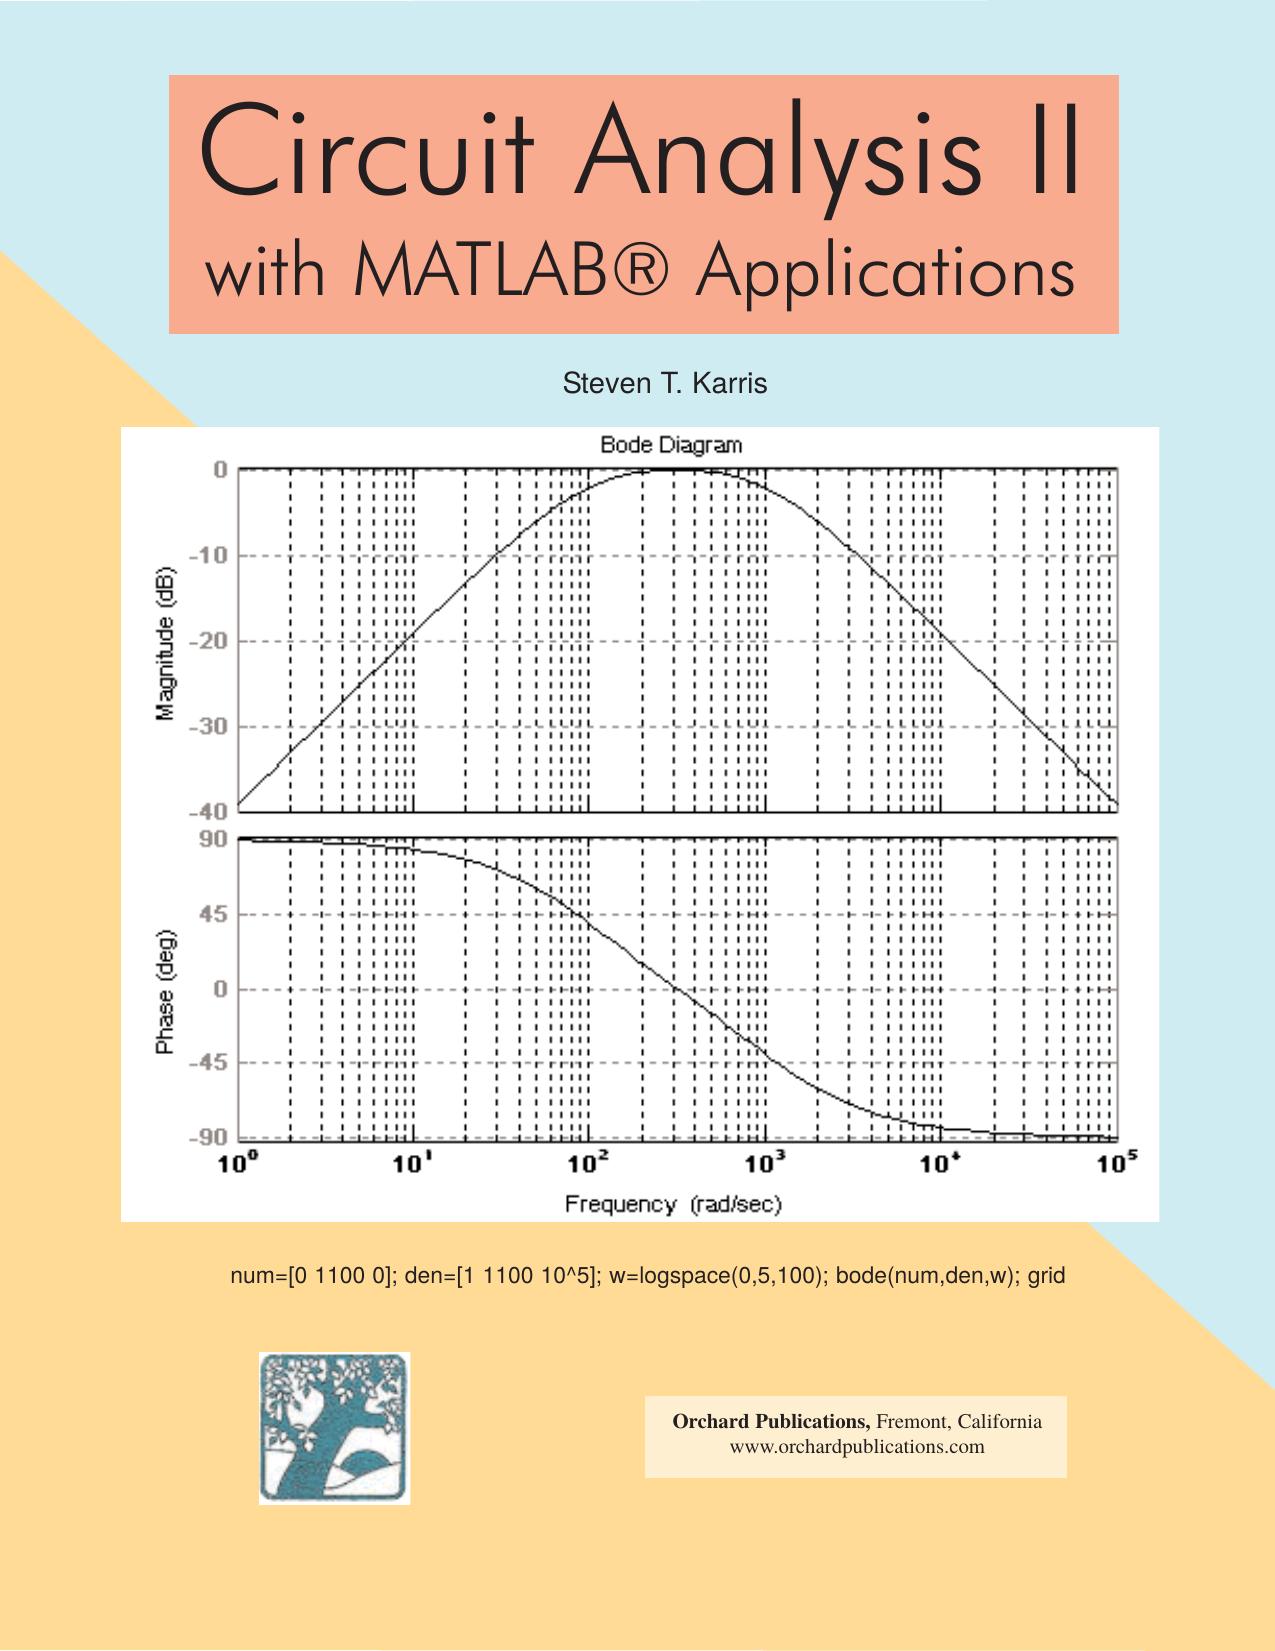 Circuit Analysis II With MATLAB Applications by Steven T. Karris & Steven Karris